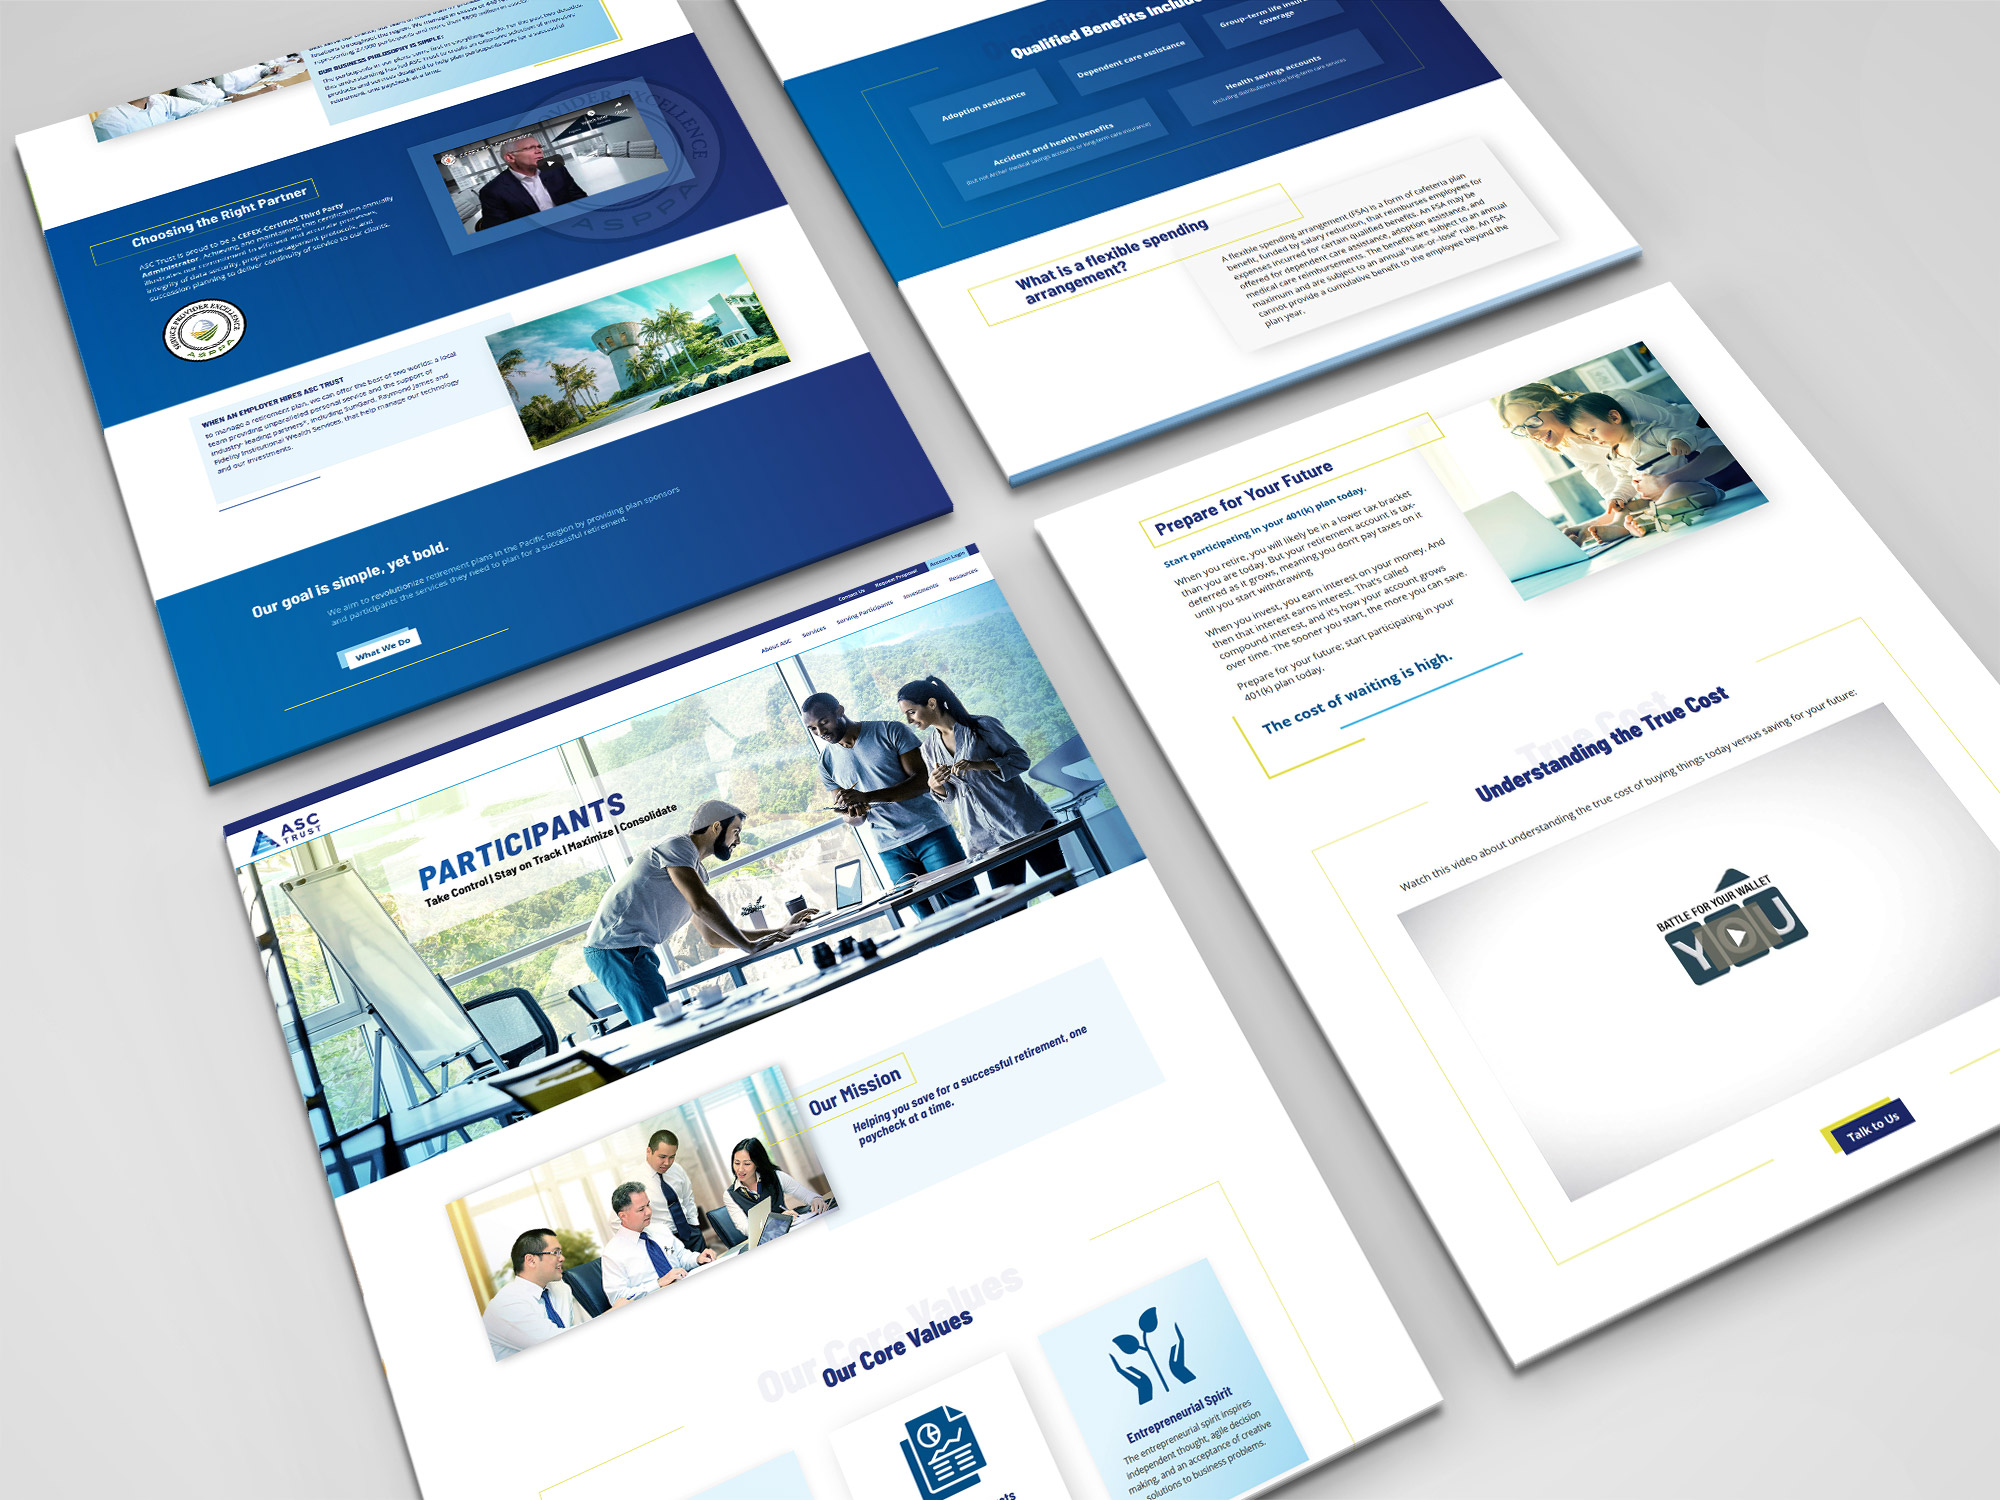 4 screen captures of ASC's web design